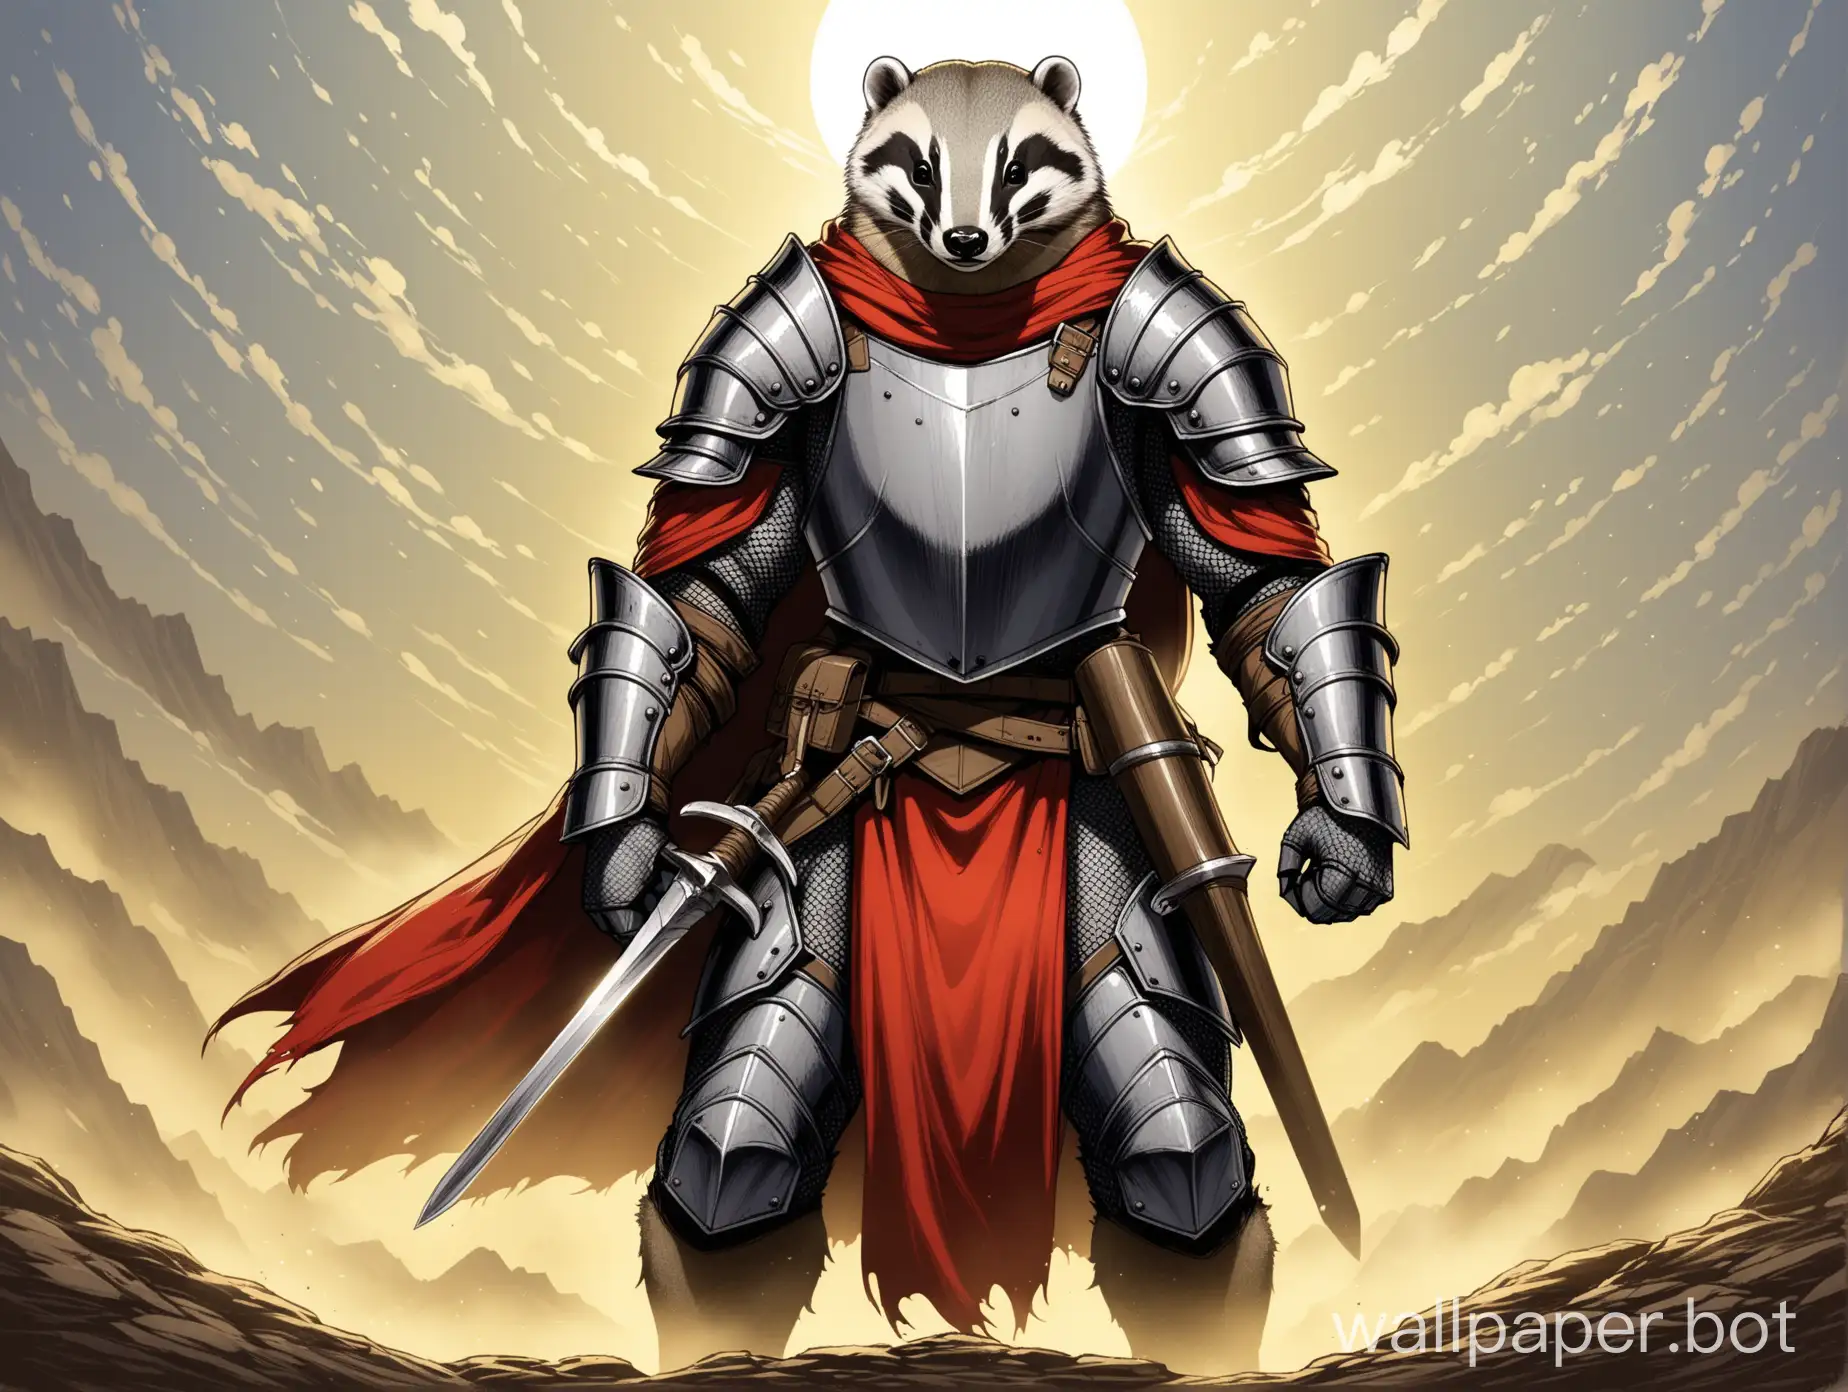 Fantasy-Artwork-of-an-American-Badger-Knight-in-Medieval-Armor